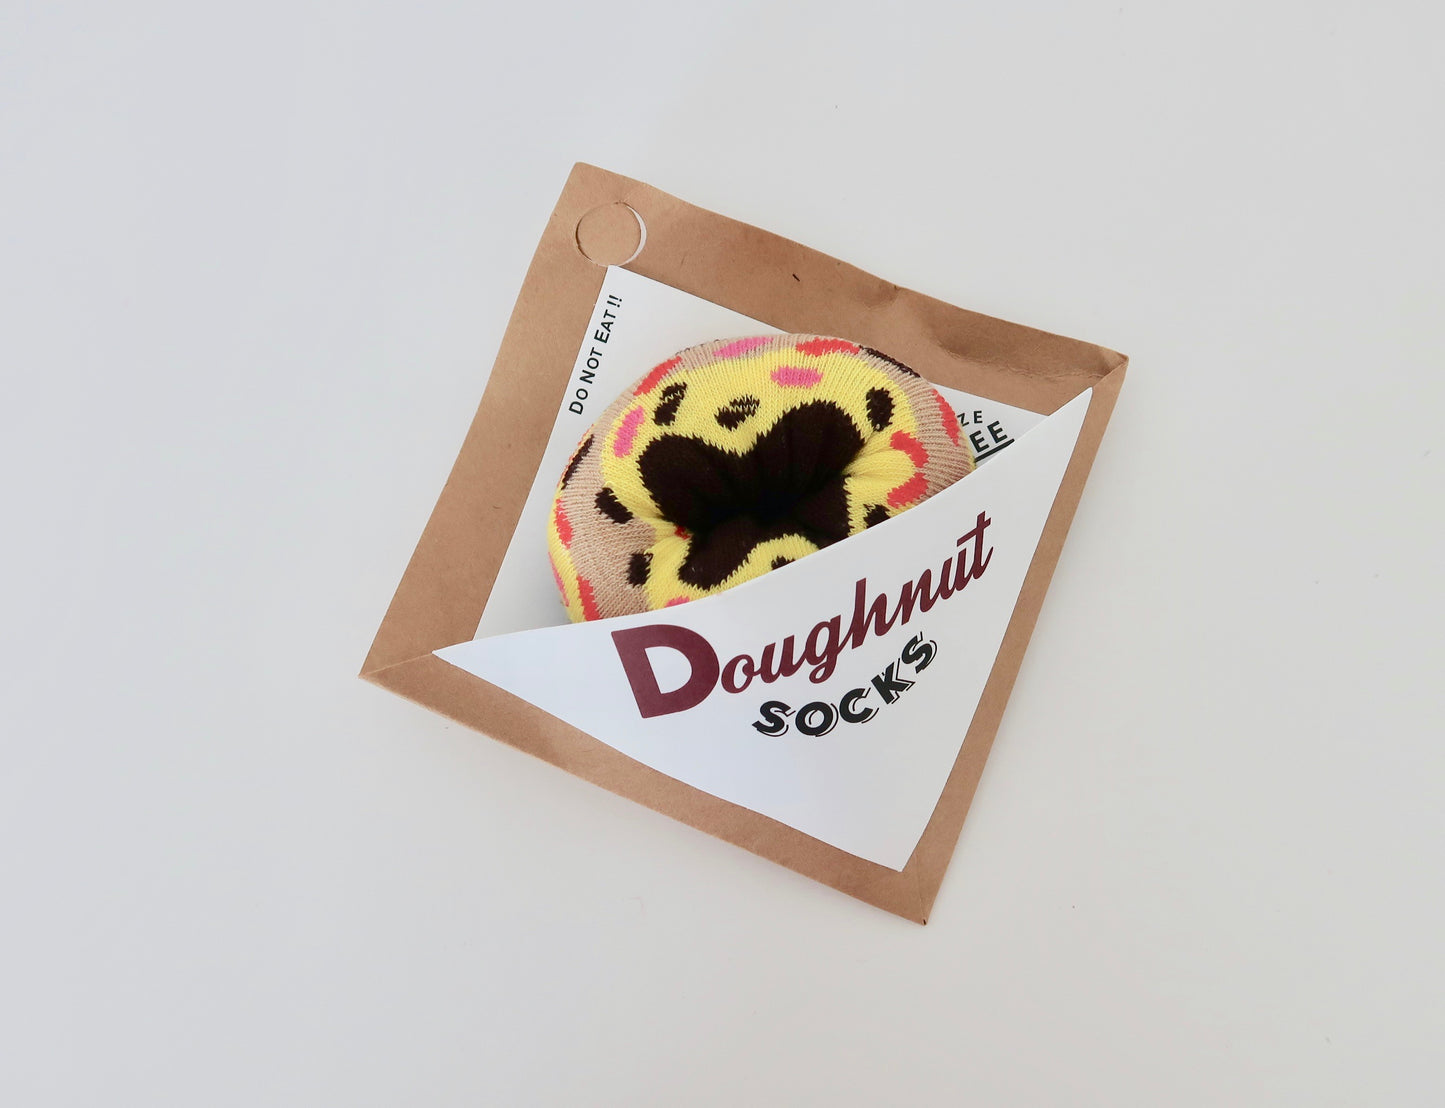 Single Doughnut Socks (3 Colors)